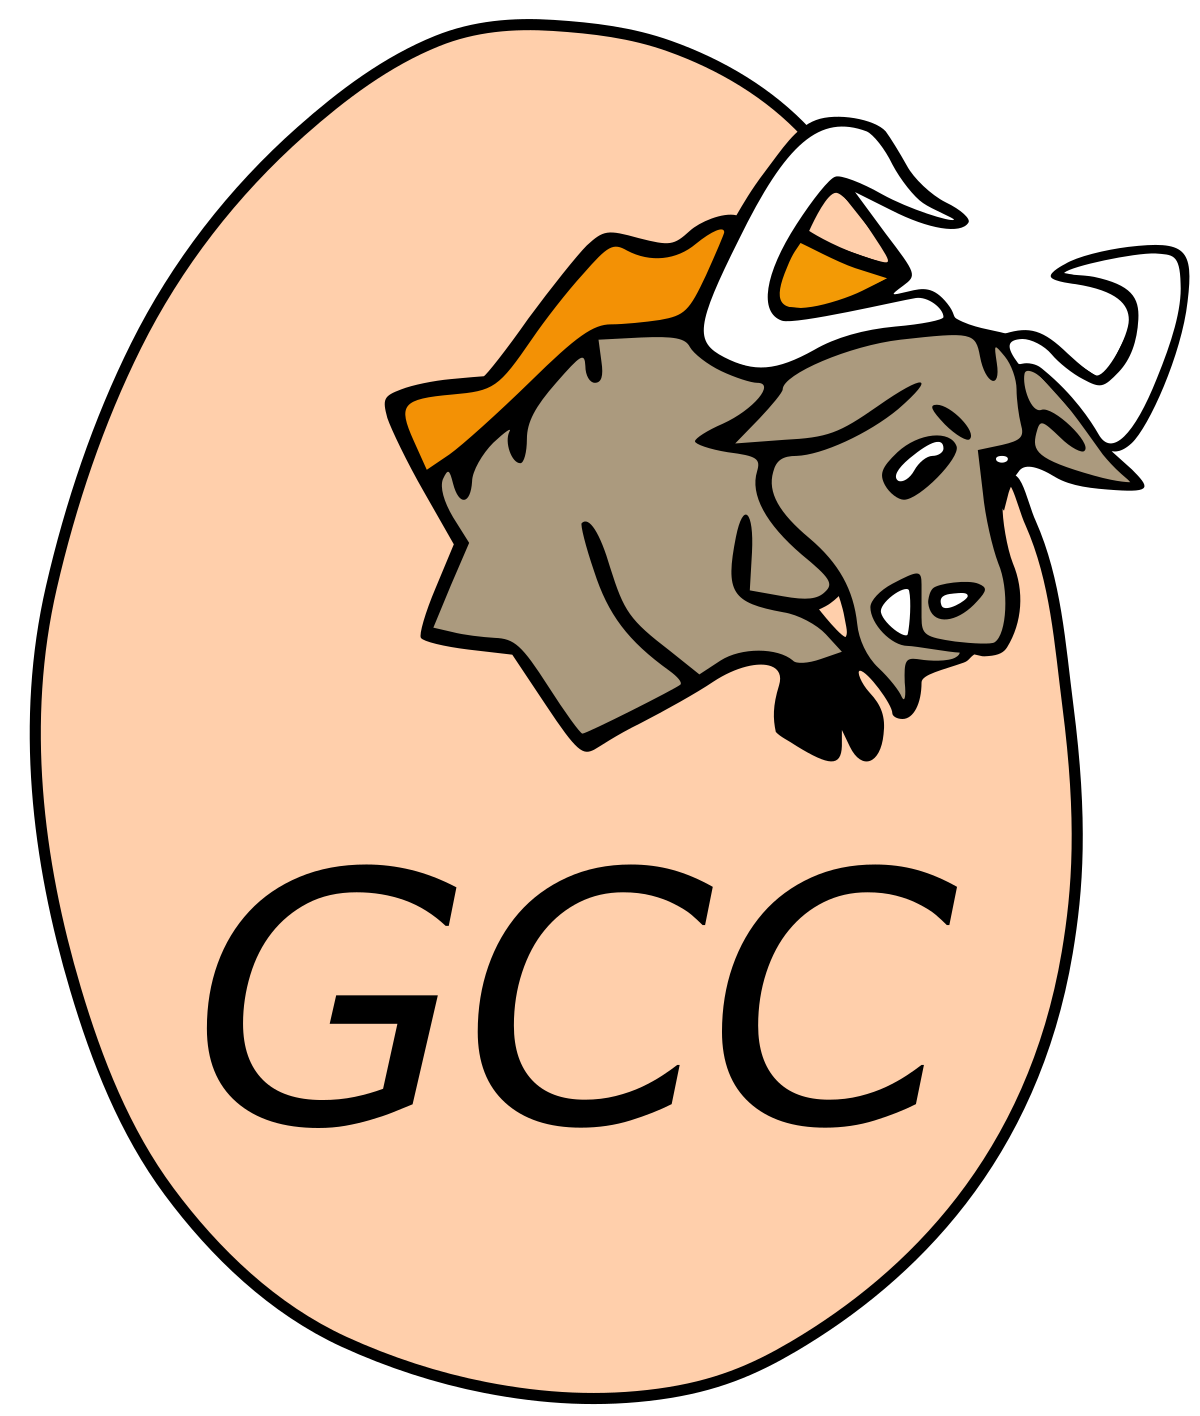 Gnu cpp. GNU Compiler collection (GCC);. GCC компилятор. GCC логотип. Логотип GNU.